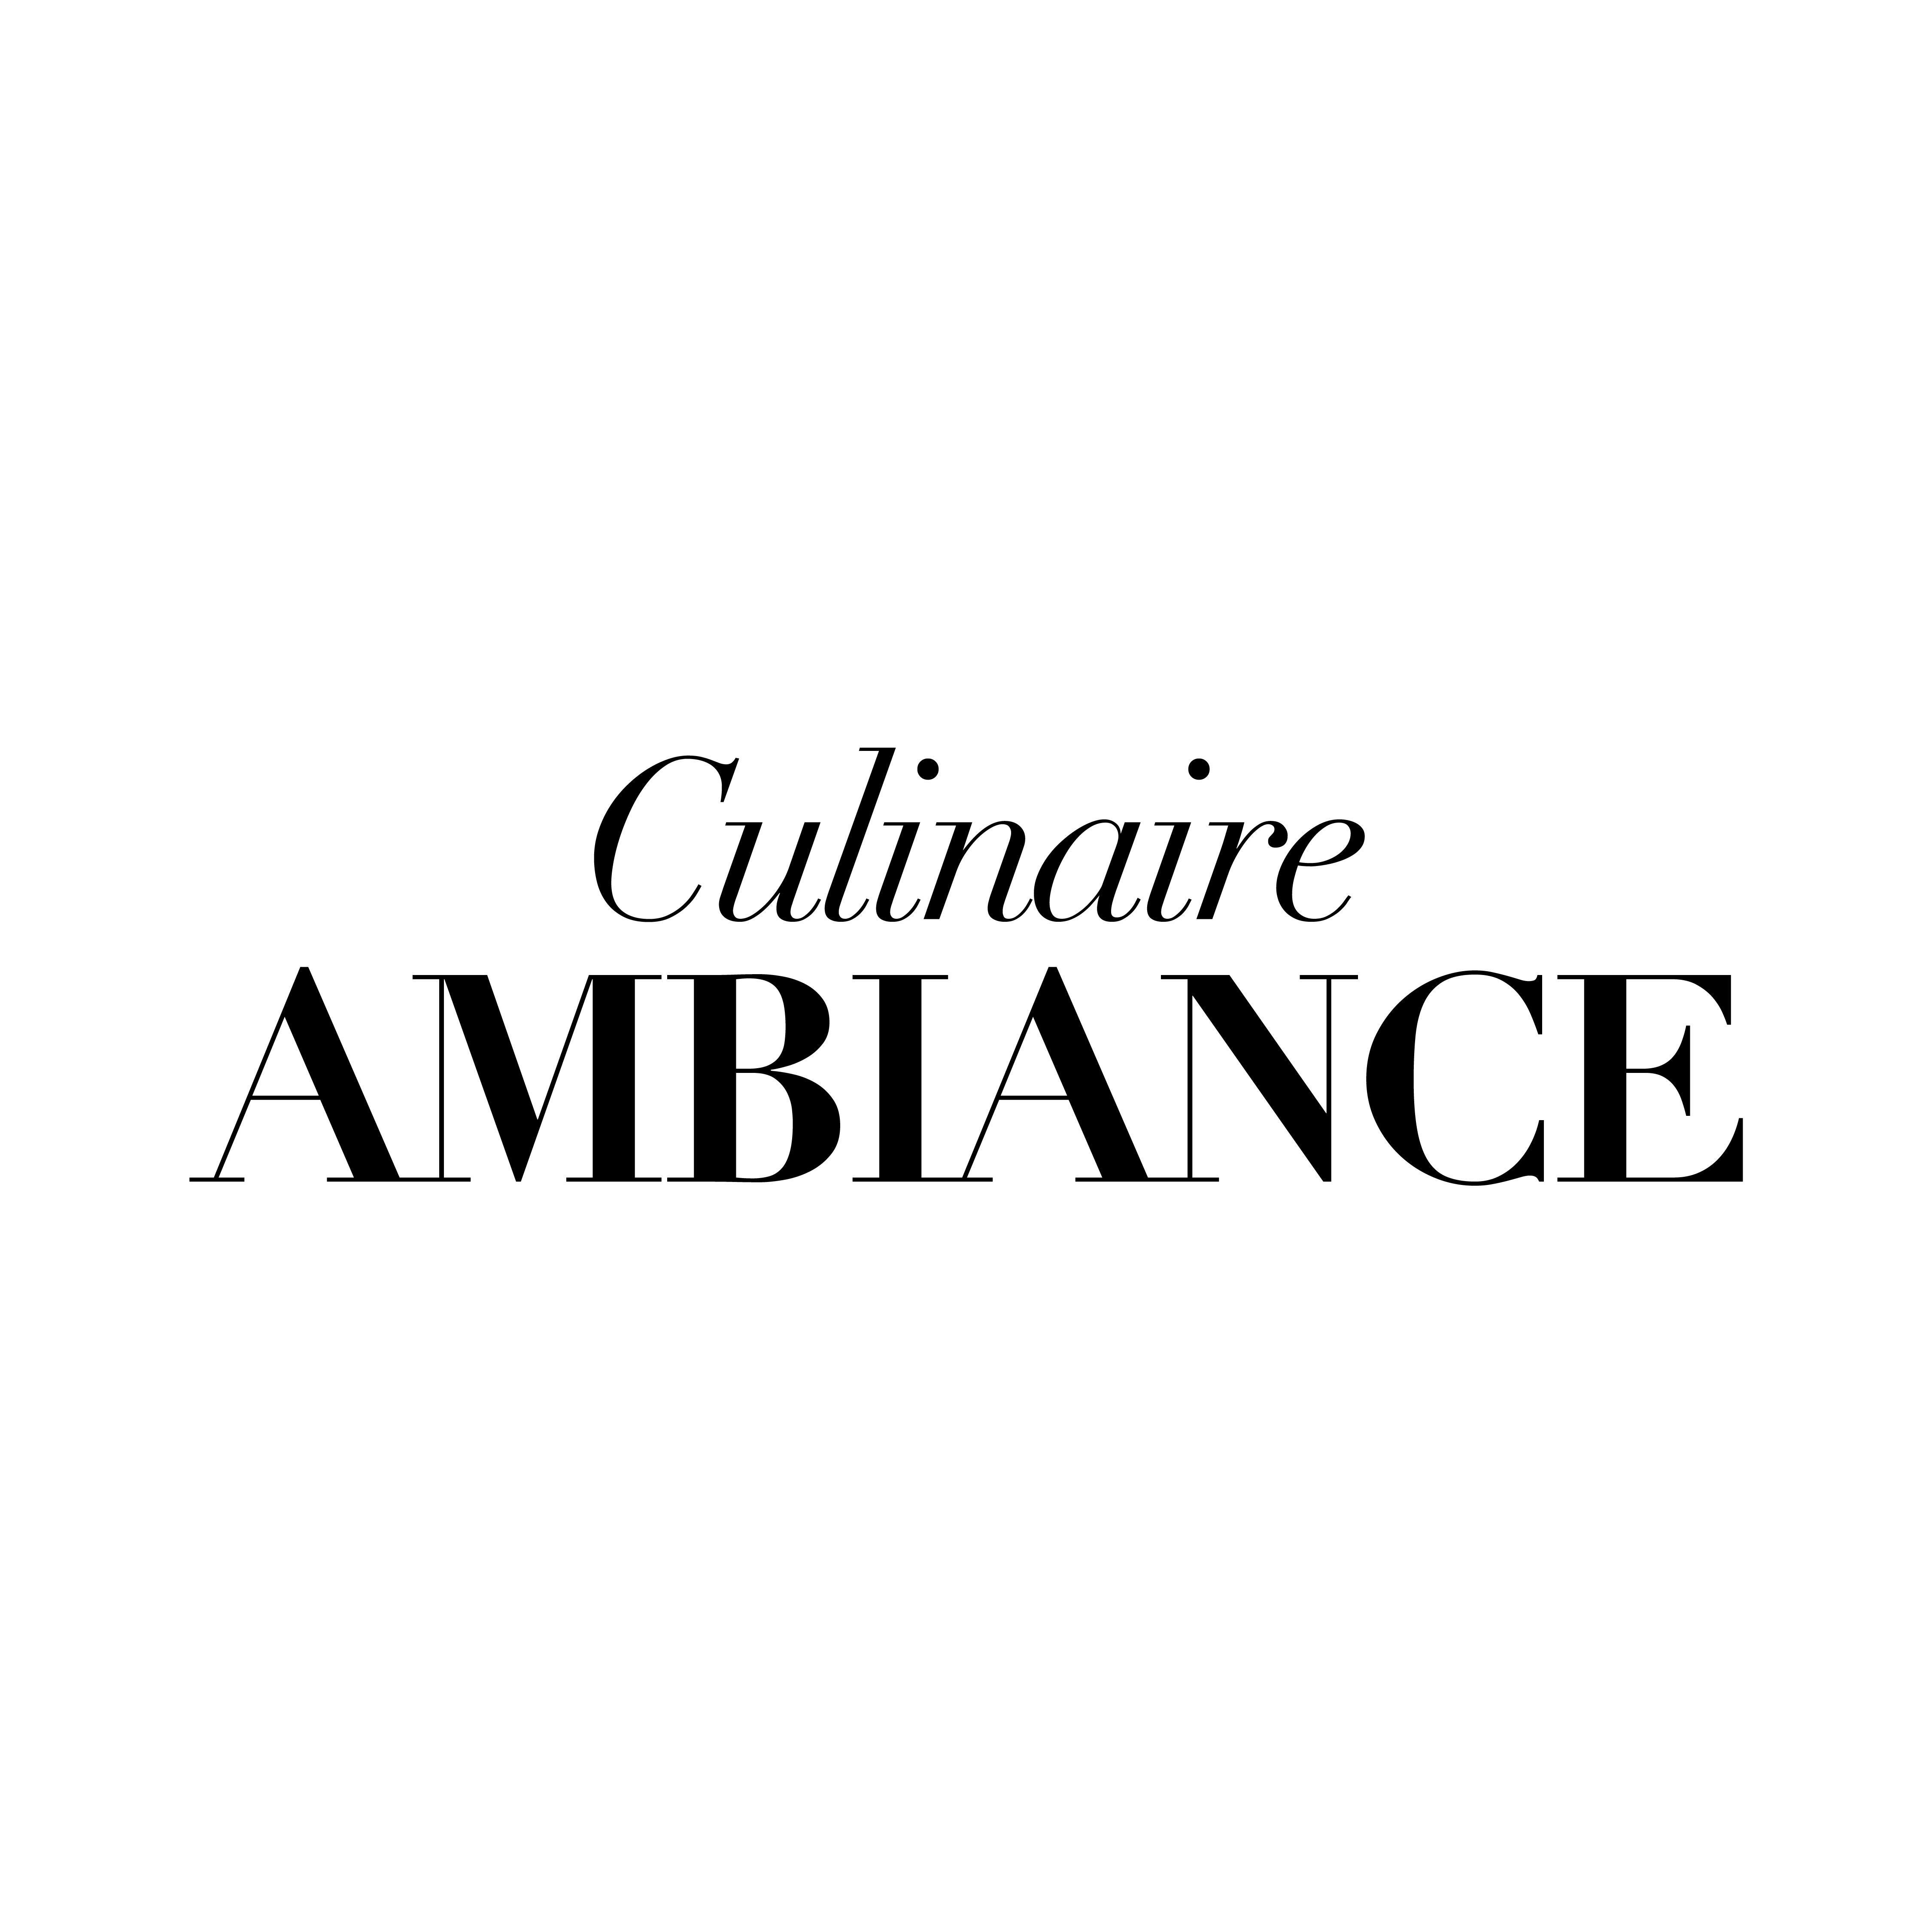 Culinaire-Ambiance-logo